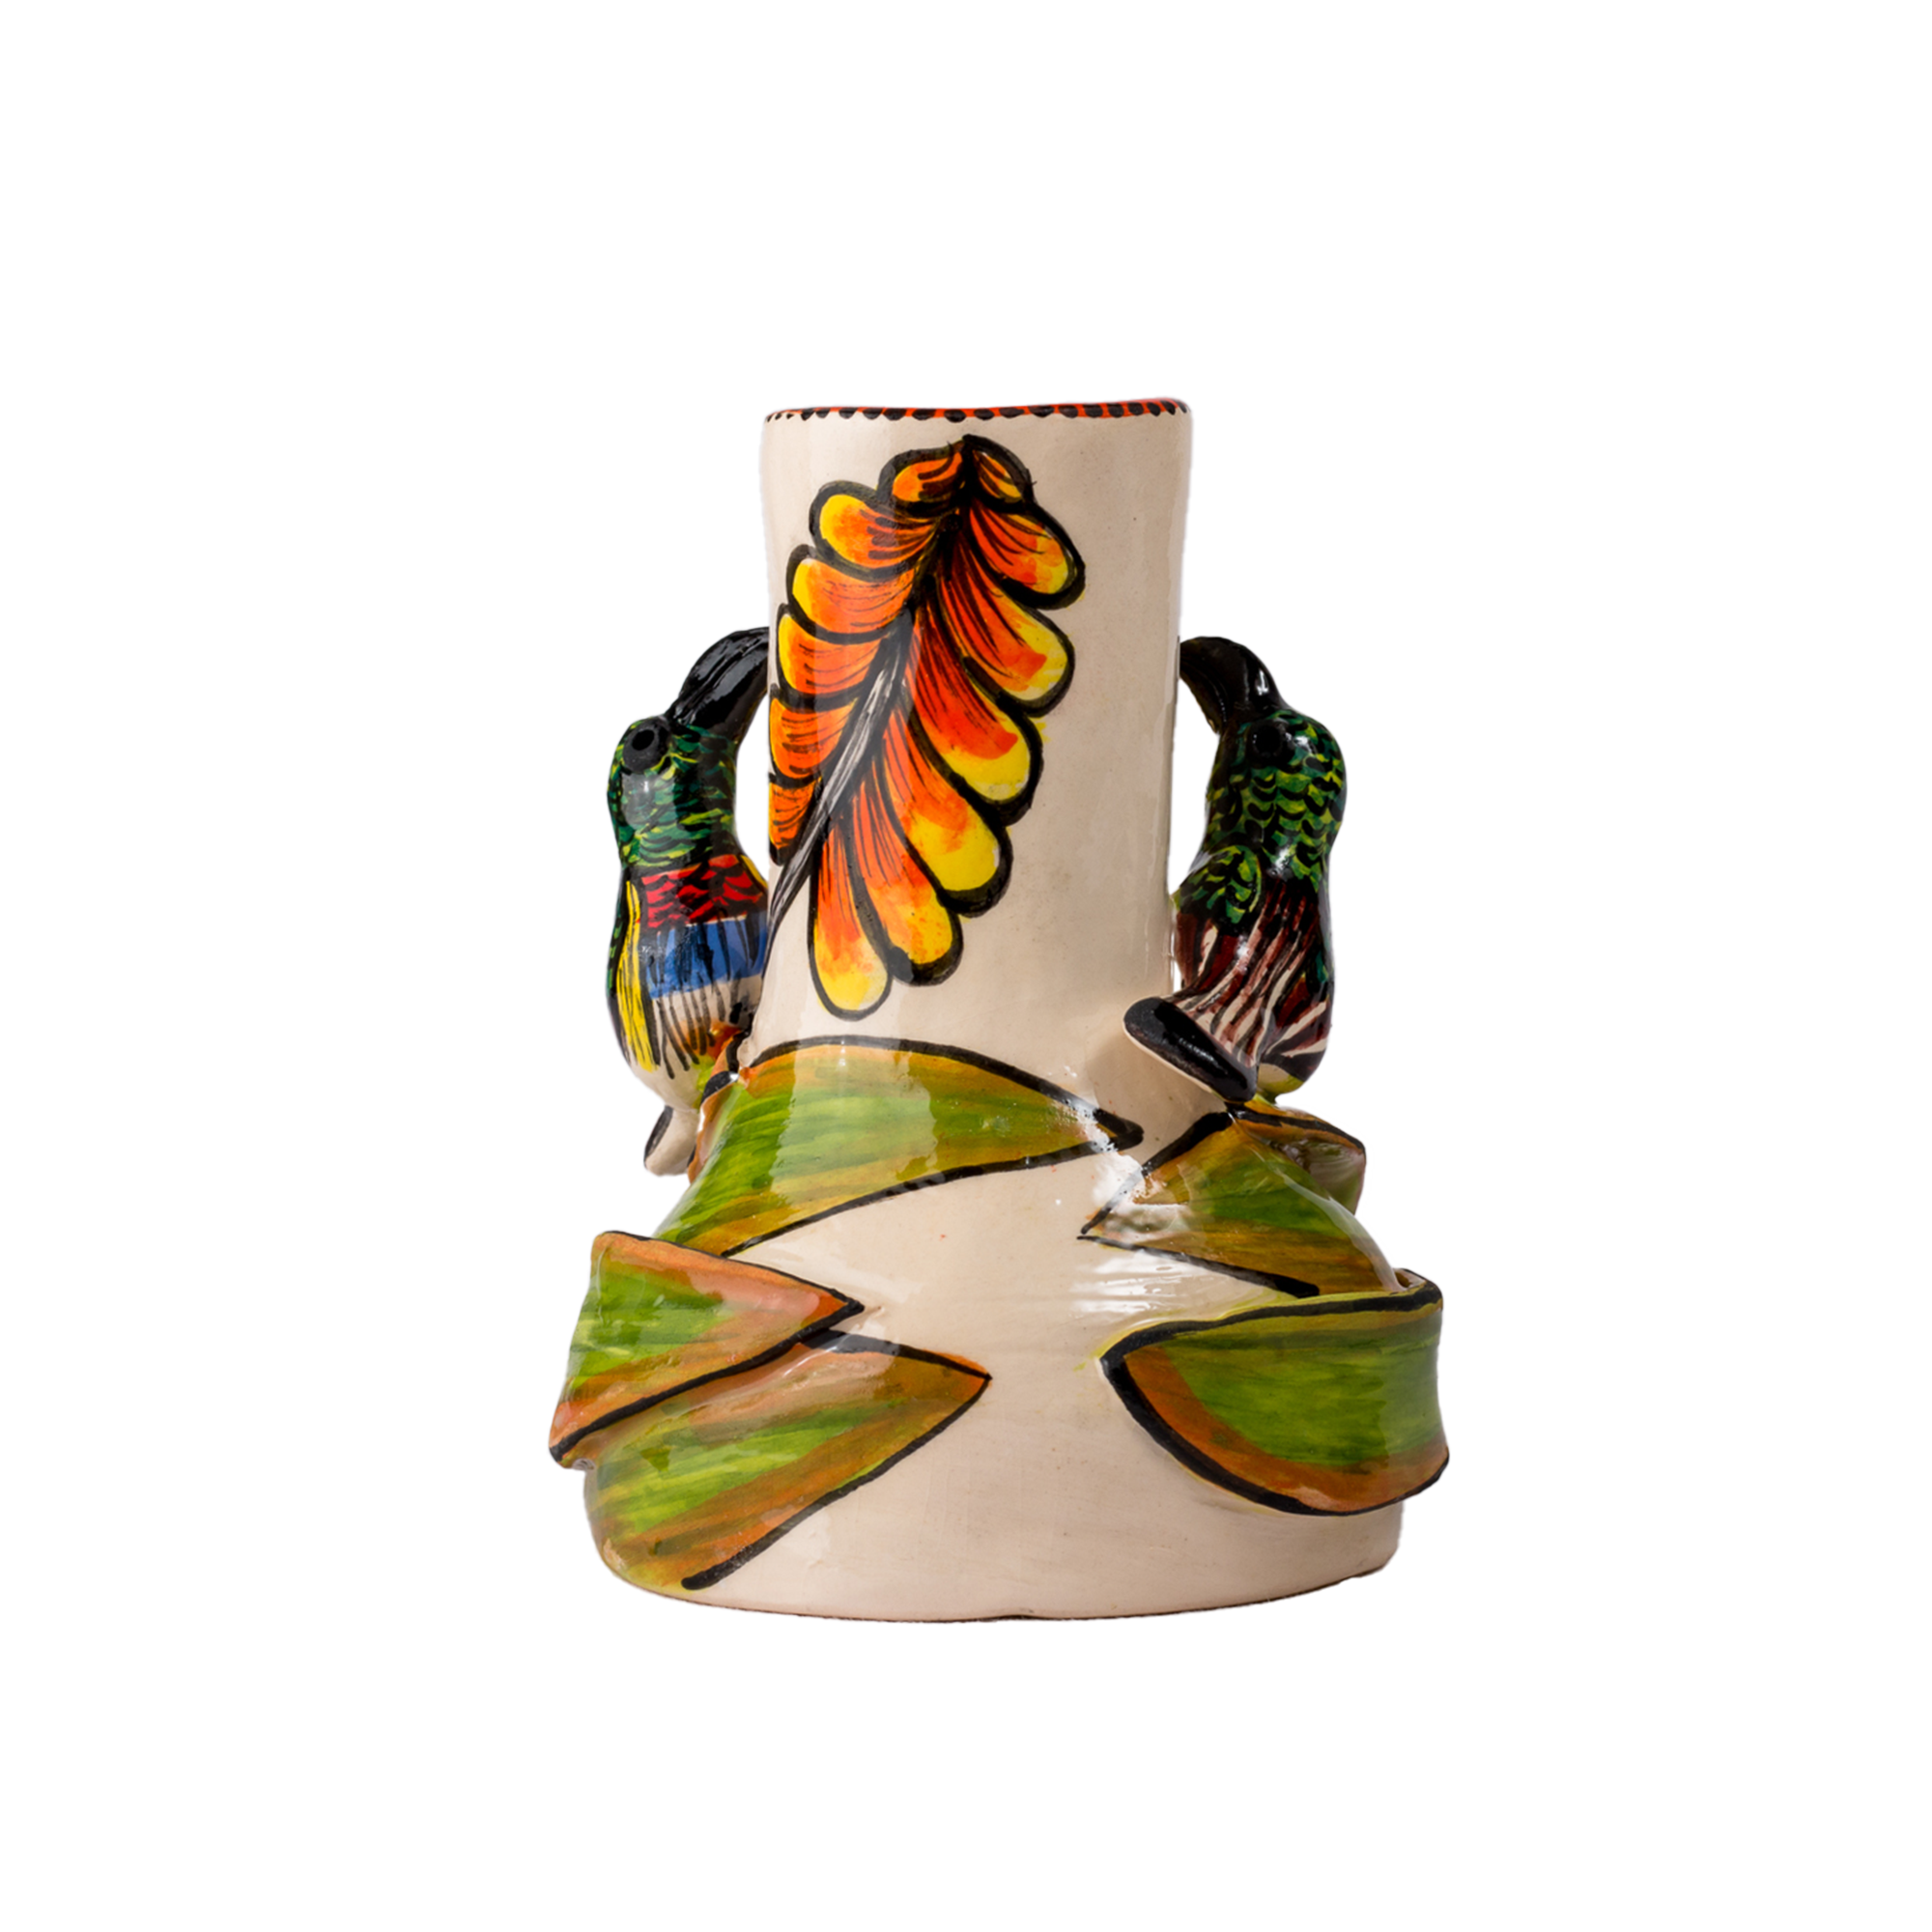 3D Ceramic Small Bird Candle Holder